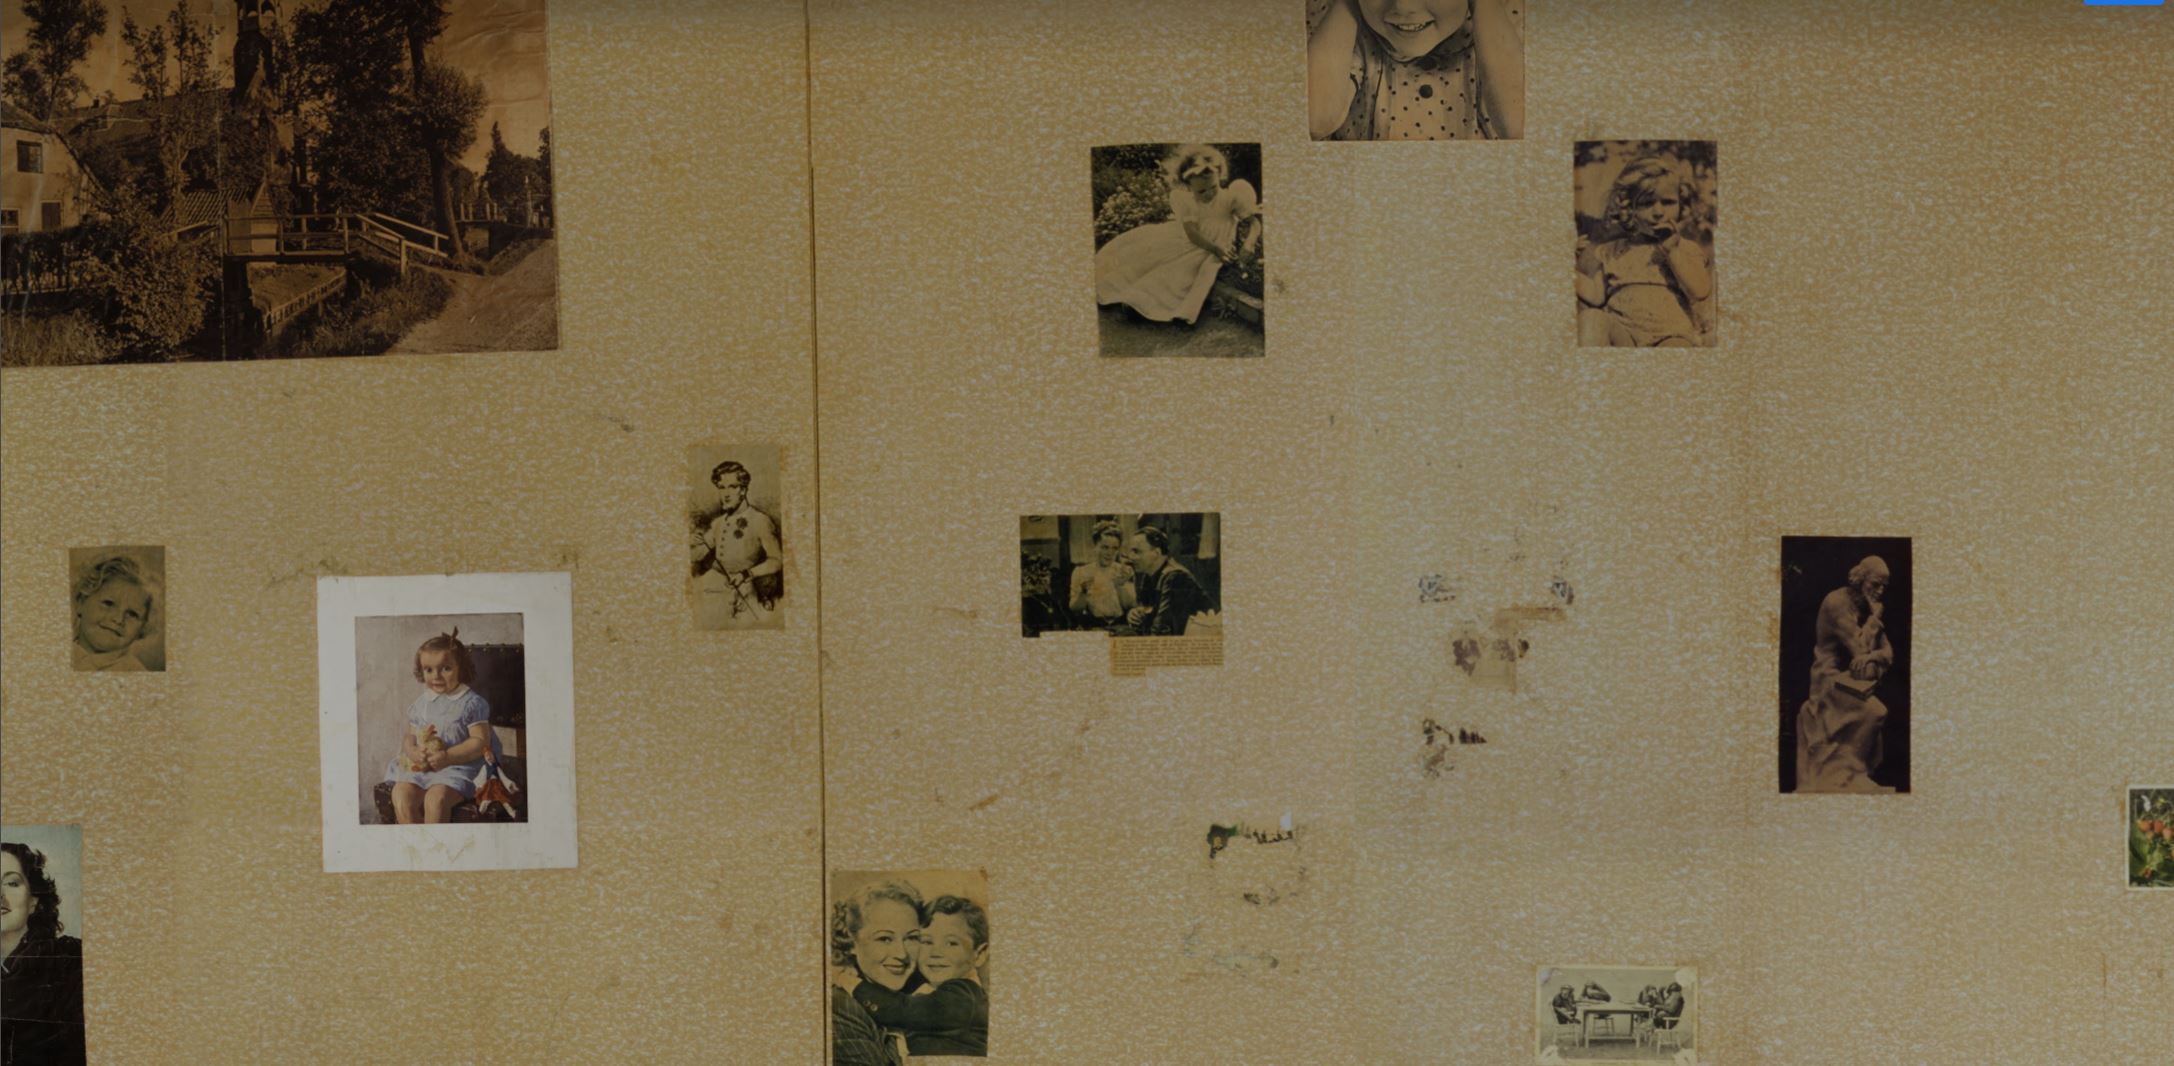 Secret Annex wall photos hung by Anne Frank